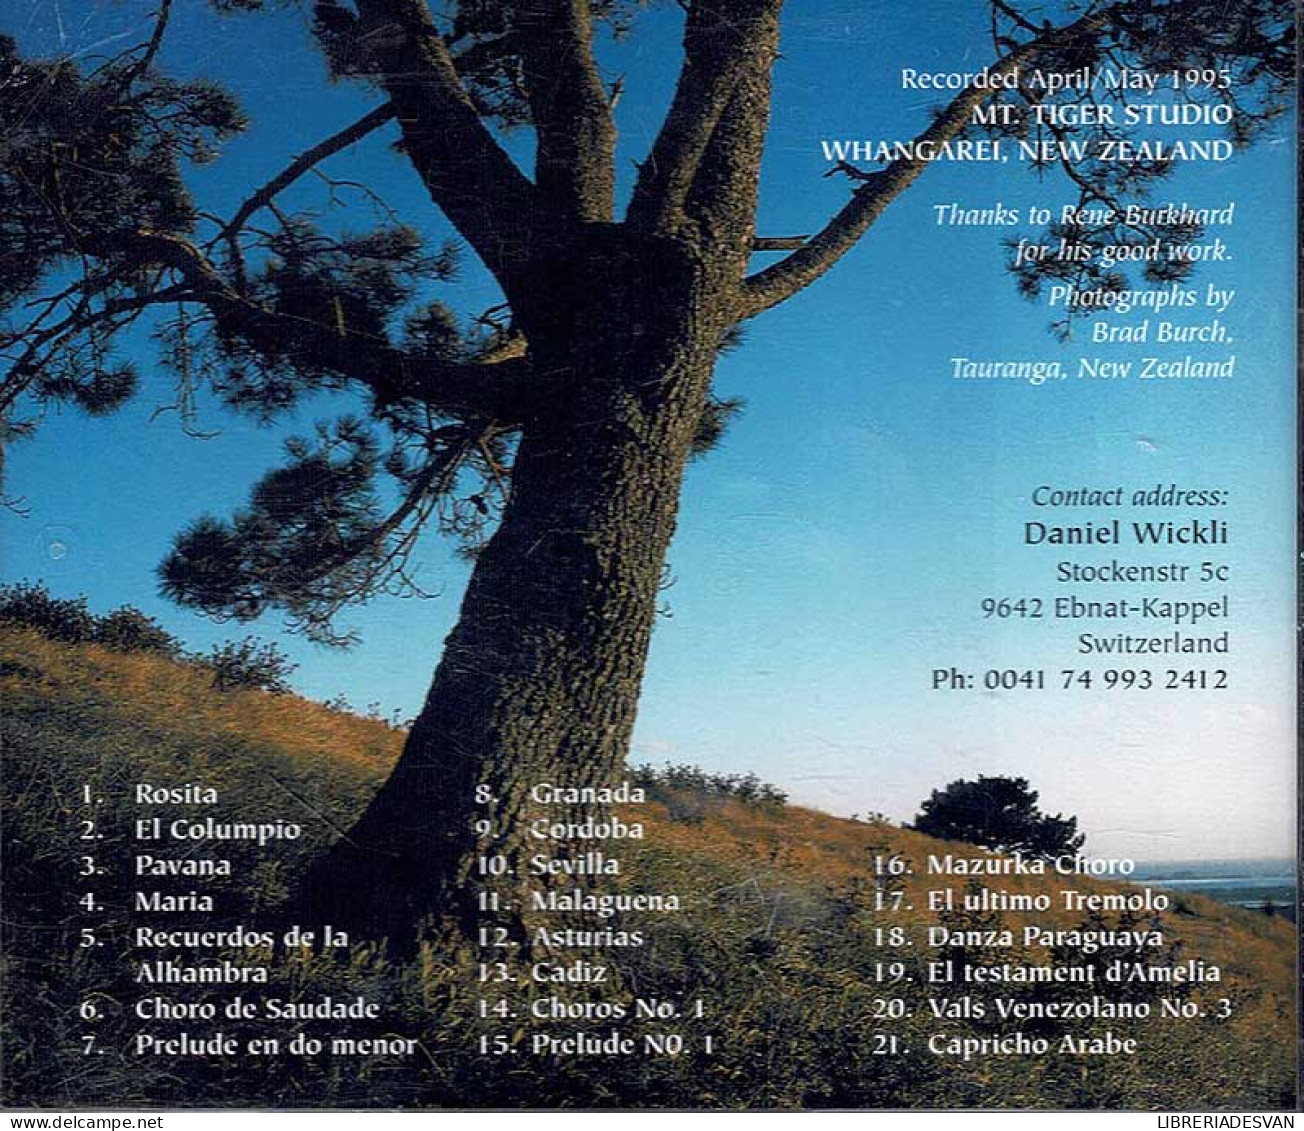 Daniel Wickli - The Timeless Beauty Of The Classical Guitar Volume Two . CD - Klassik